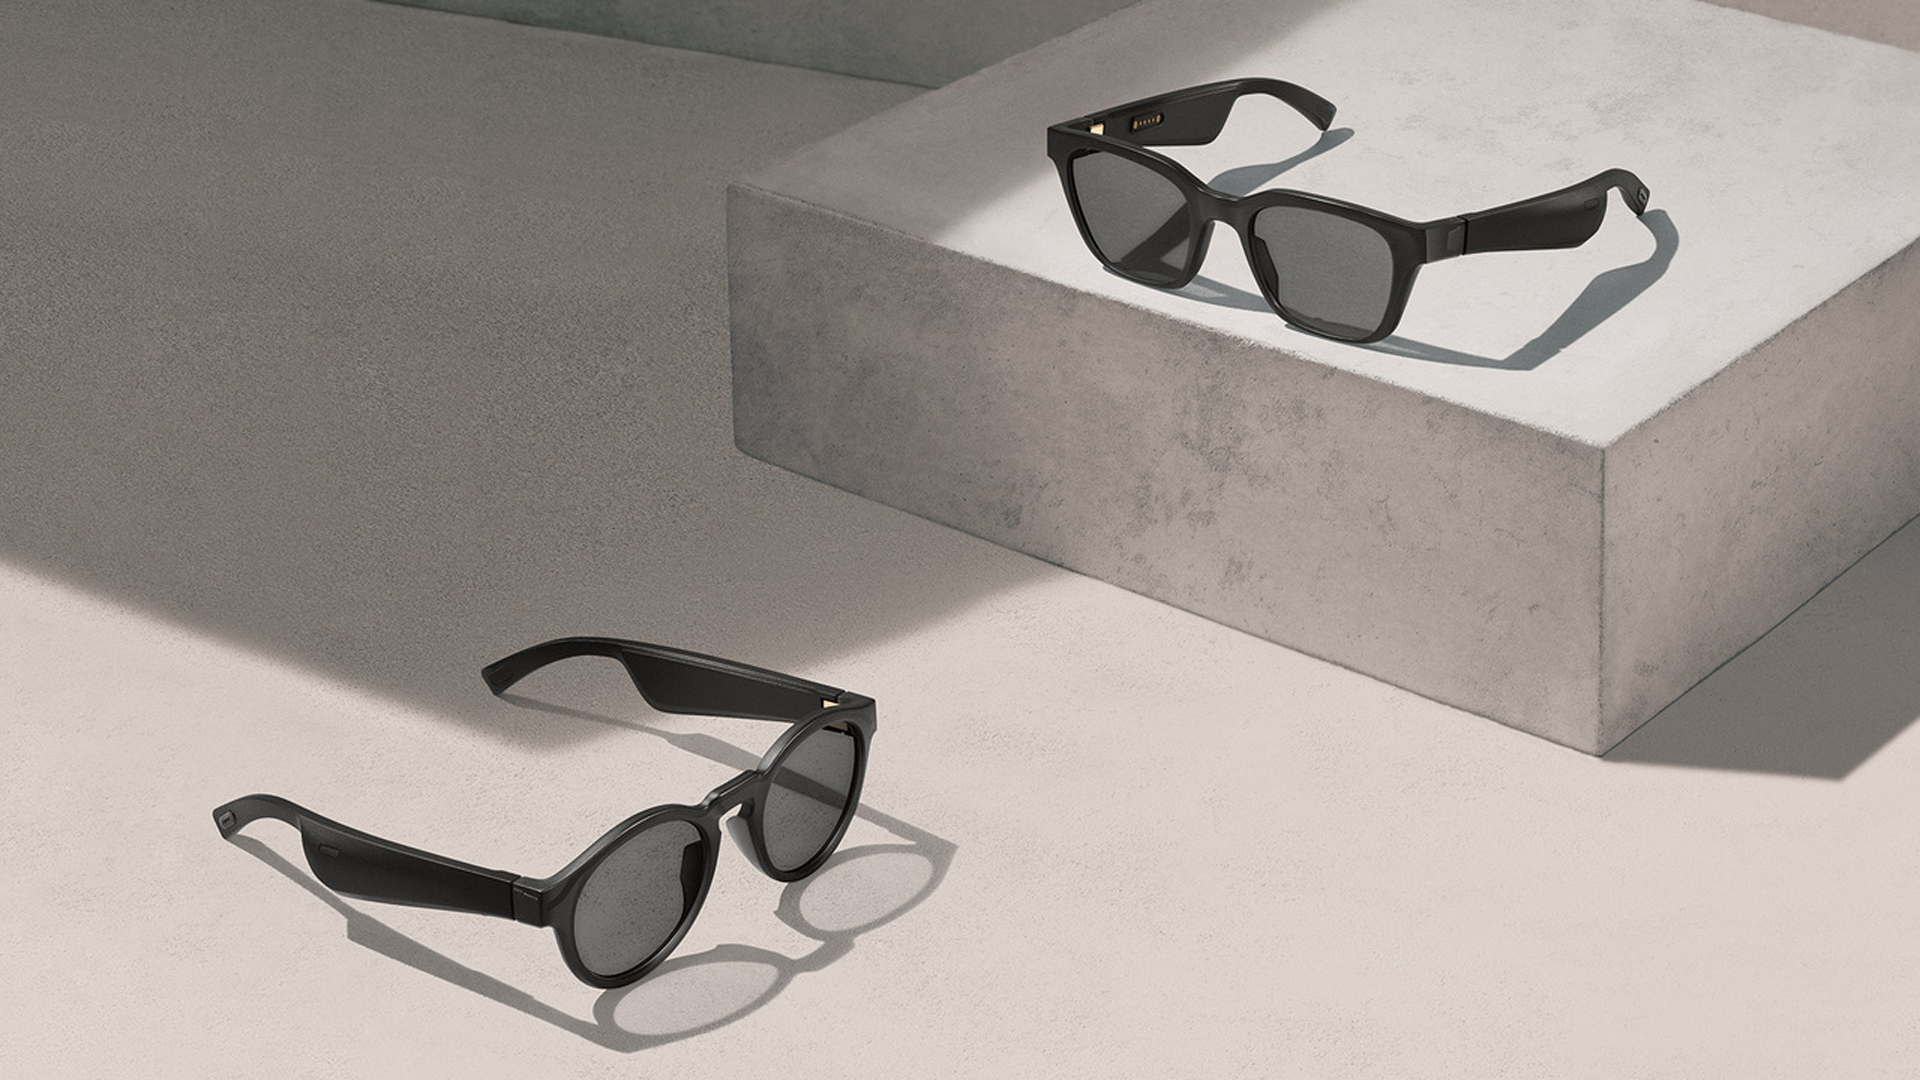 Bose Sunglasses Reviews Cover Audio Frames Alto and Rondo Styles